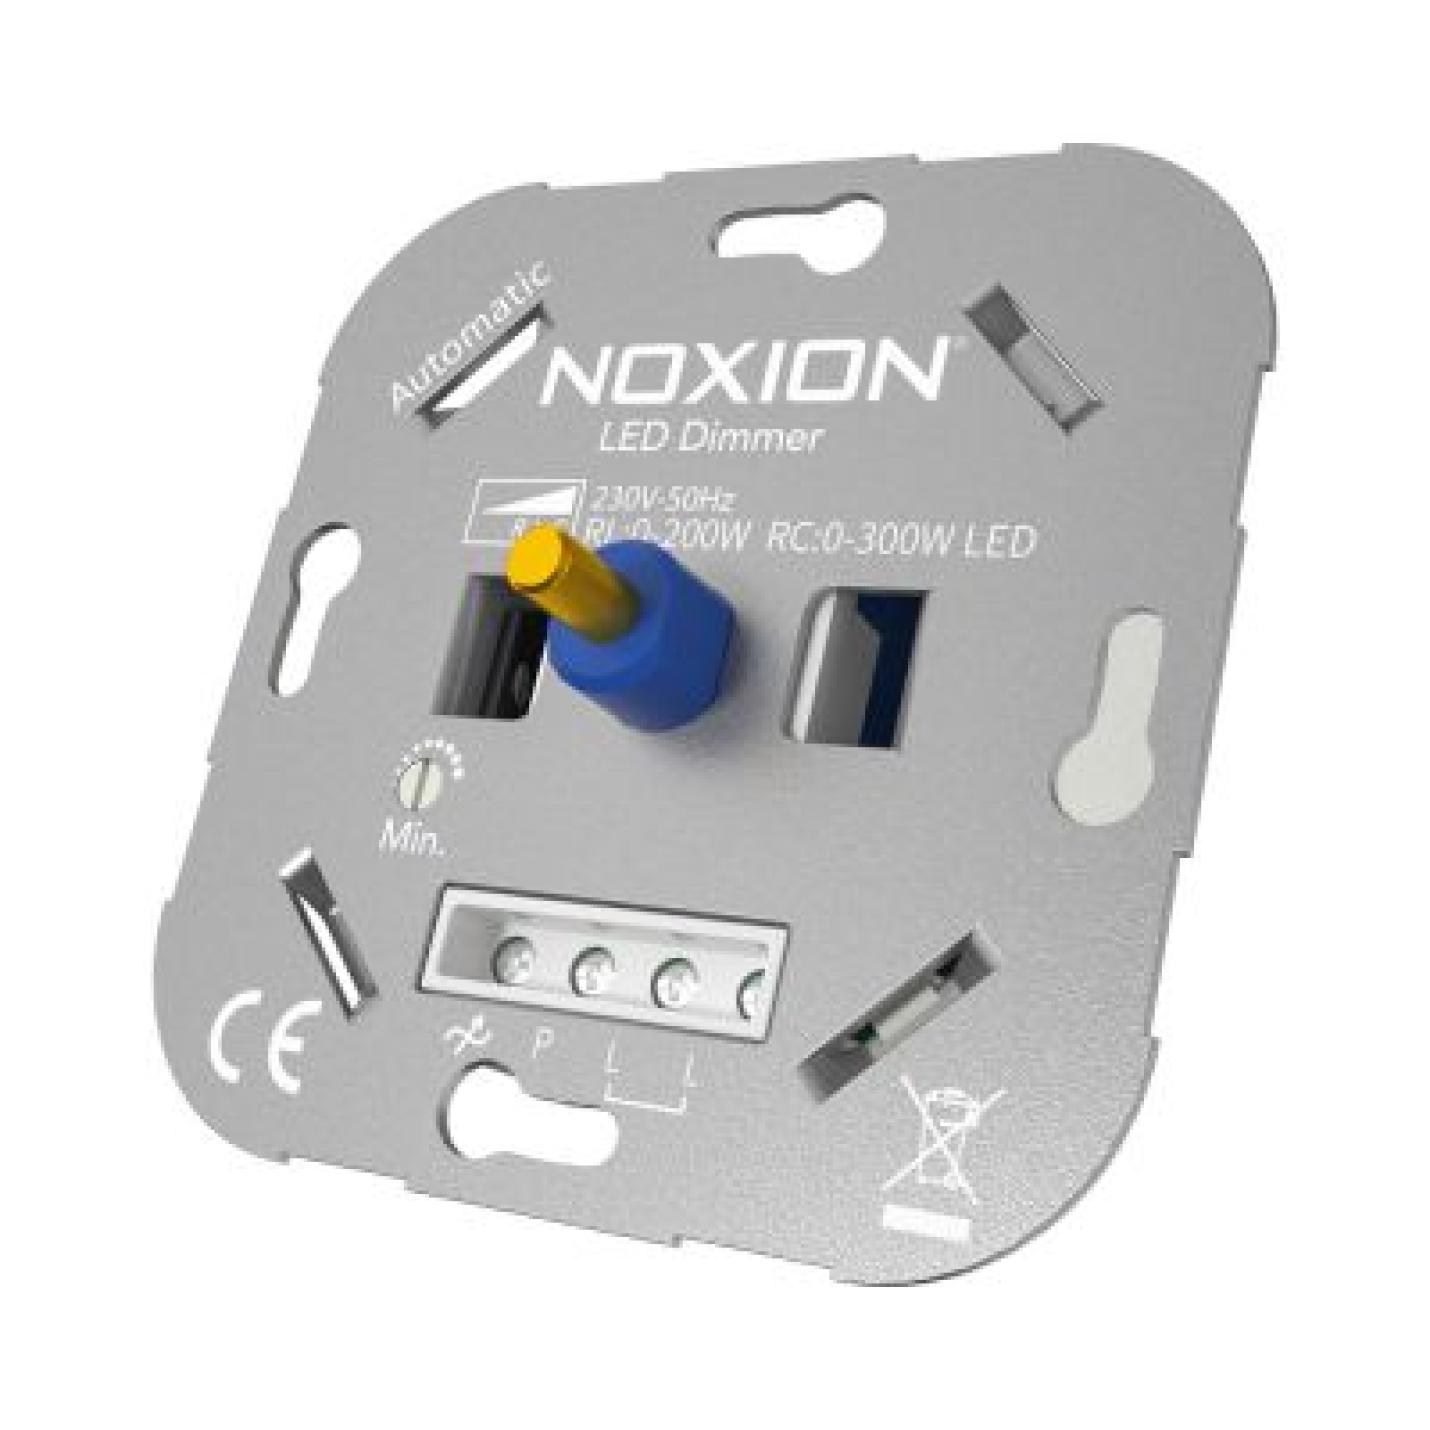 Noxion Automatische LED Dimmer Schakelaar RLC 0-300W 220-240V; Afbeelding: 2